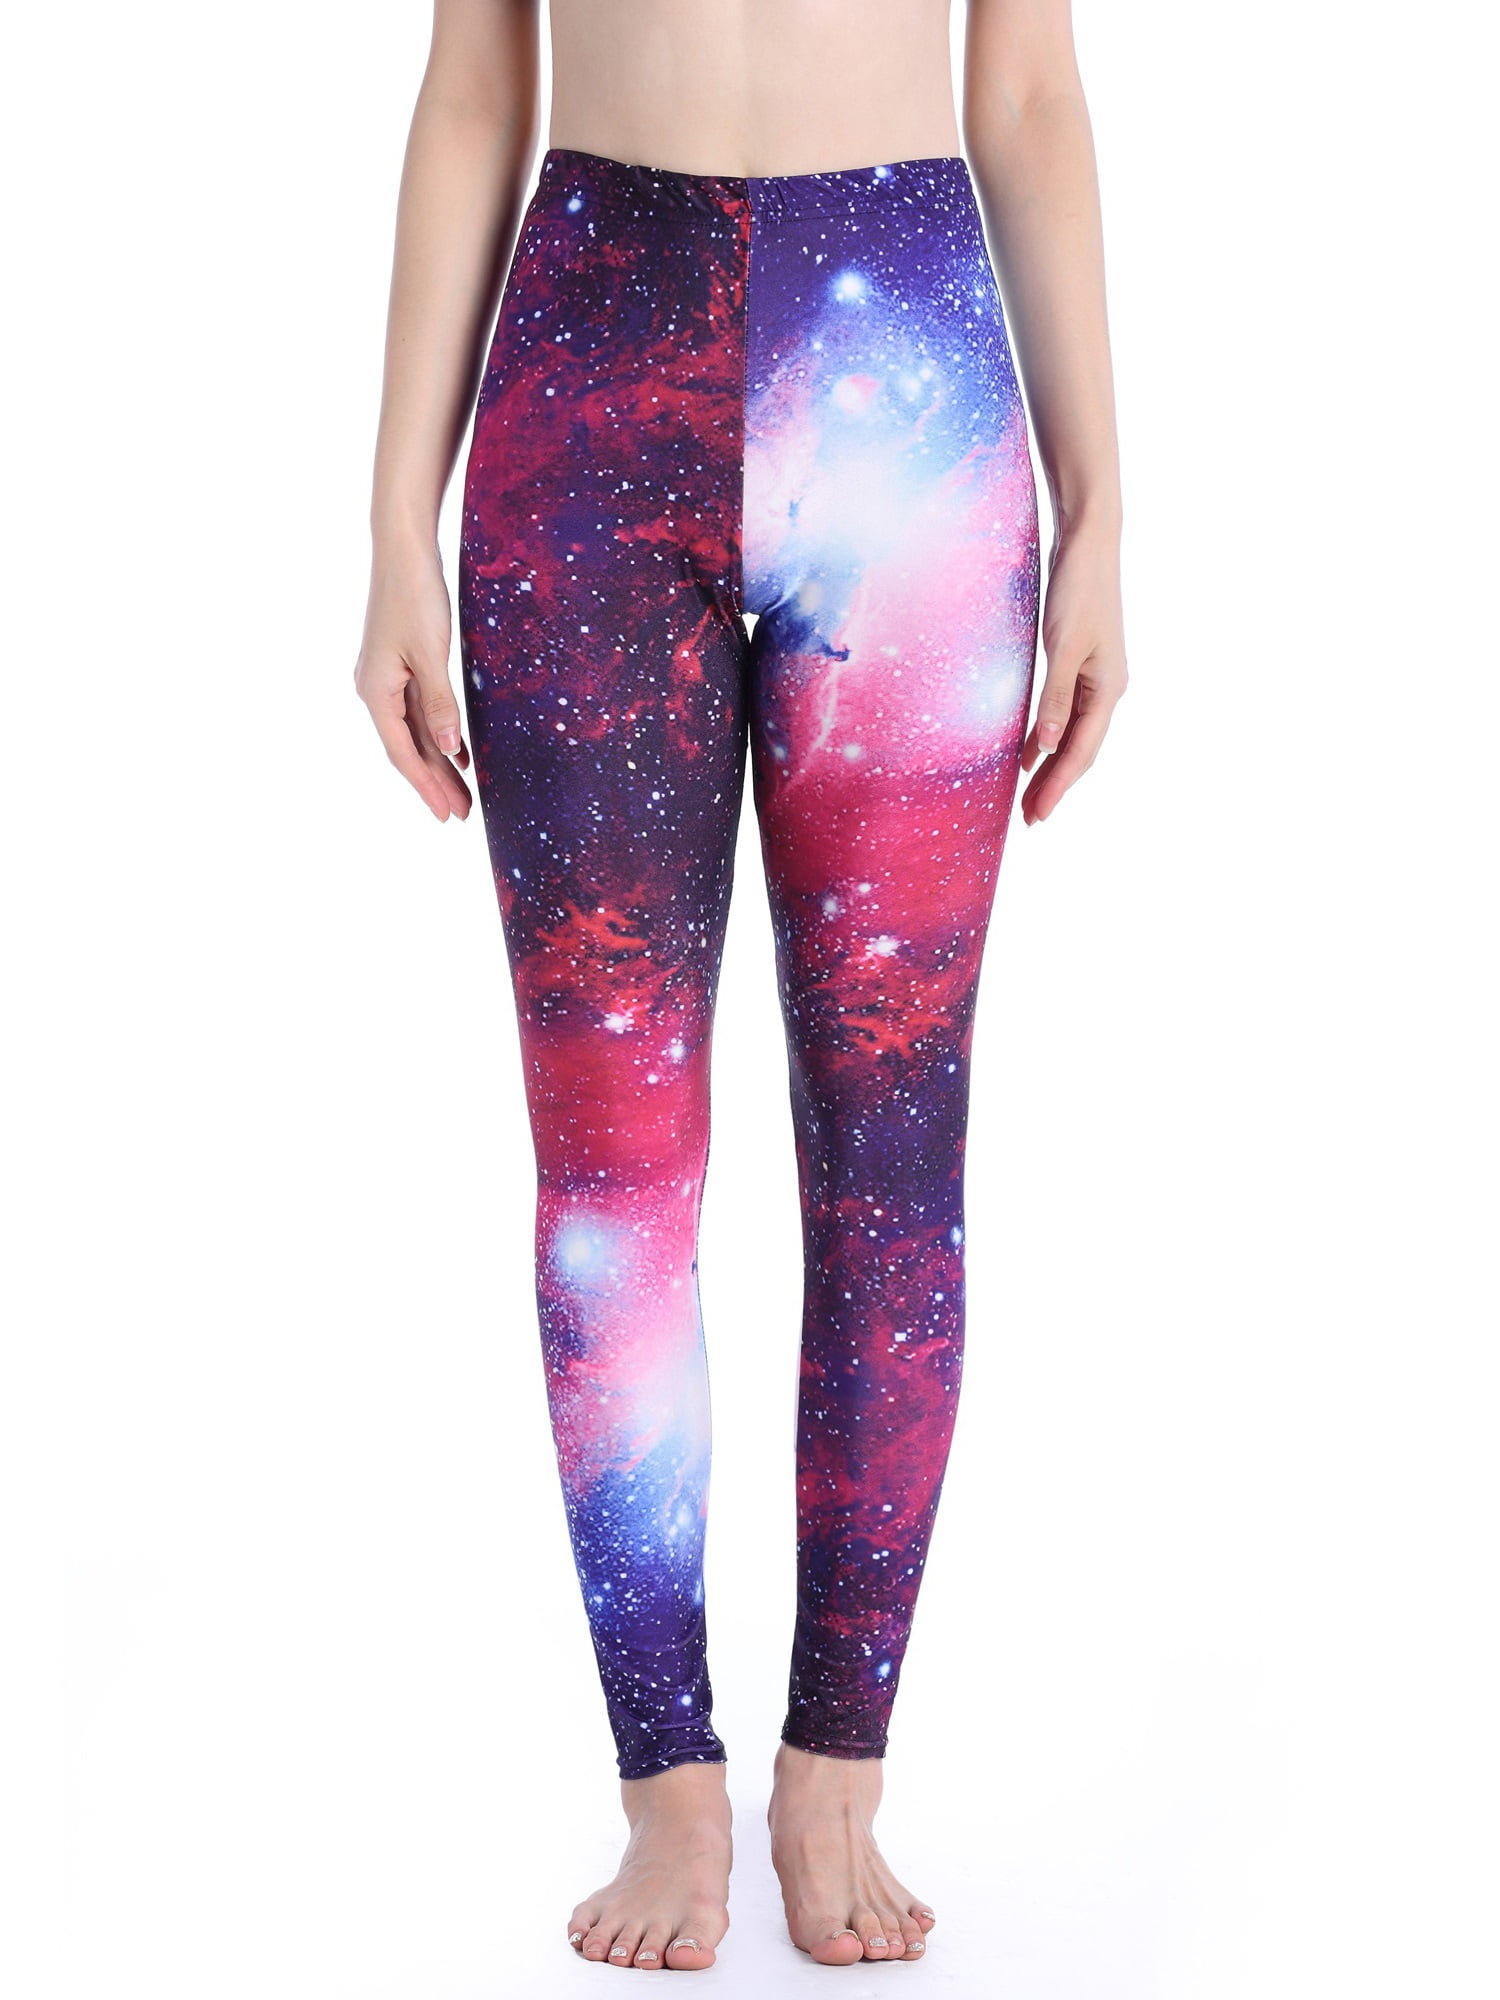 Buy Galaxy Leggings, Printed Leggings, Yoga Pants, Running Pants